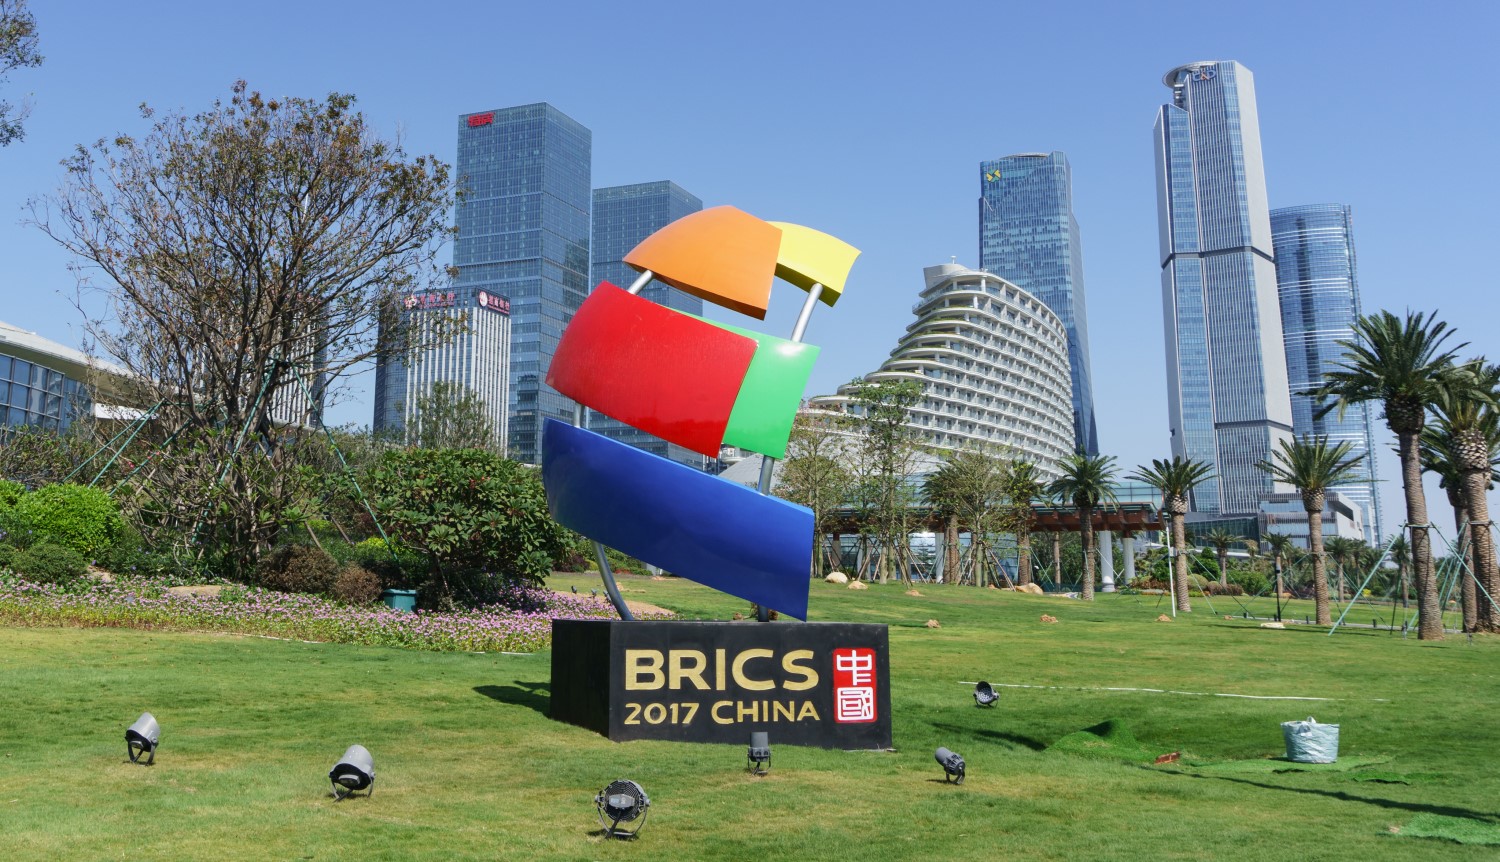 Can I Buy BRICS Tether?